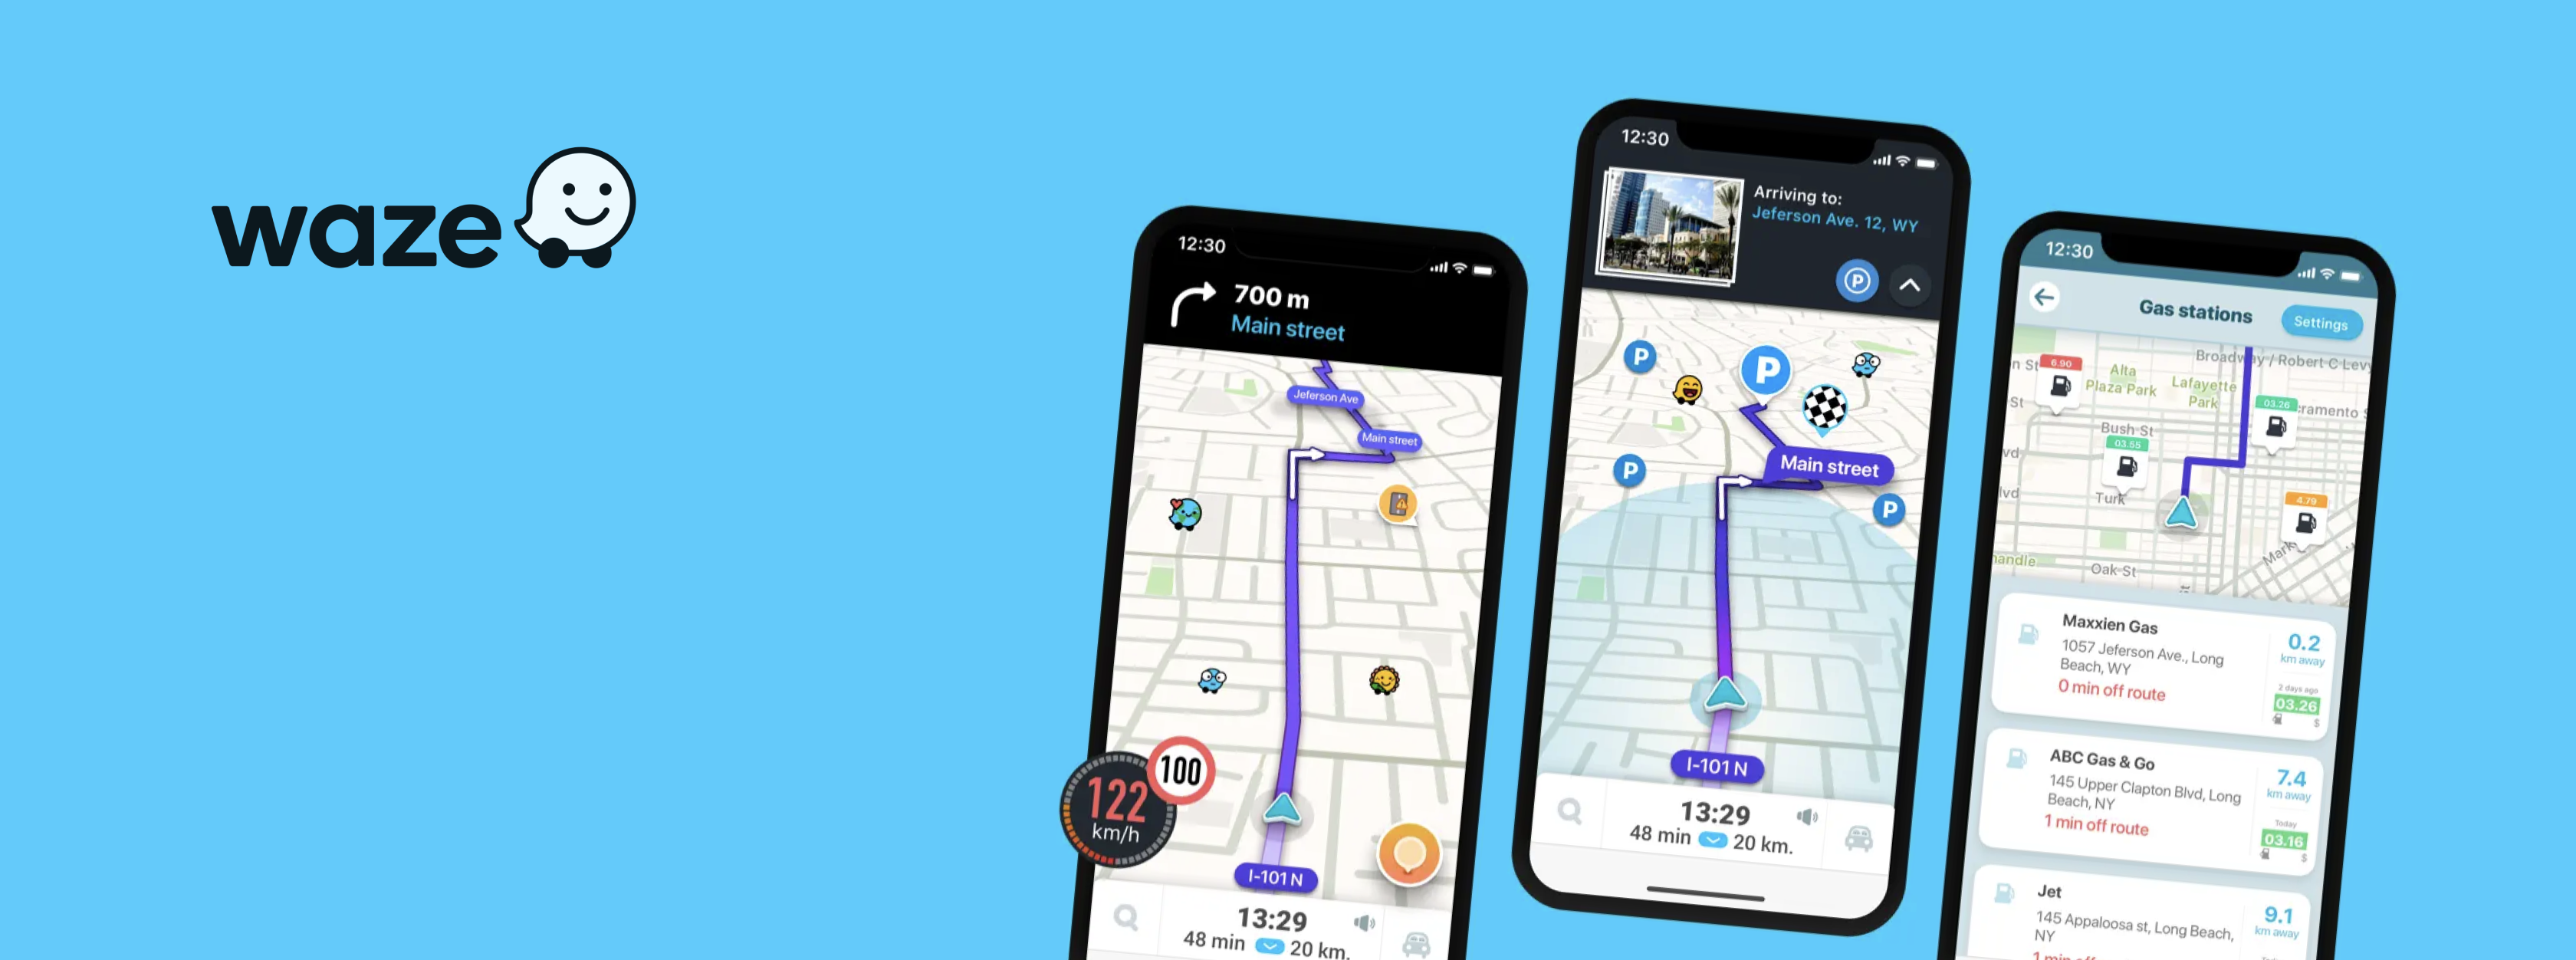 How To Fix Waze Keeps Crashing On Android